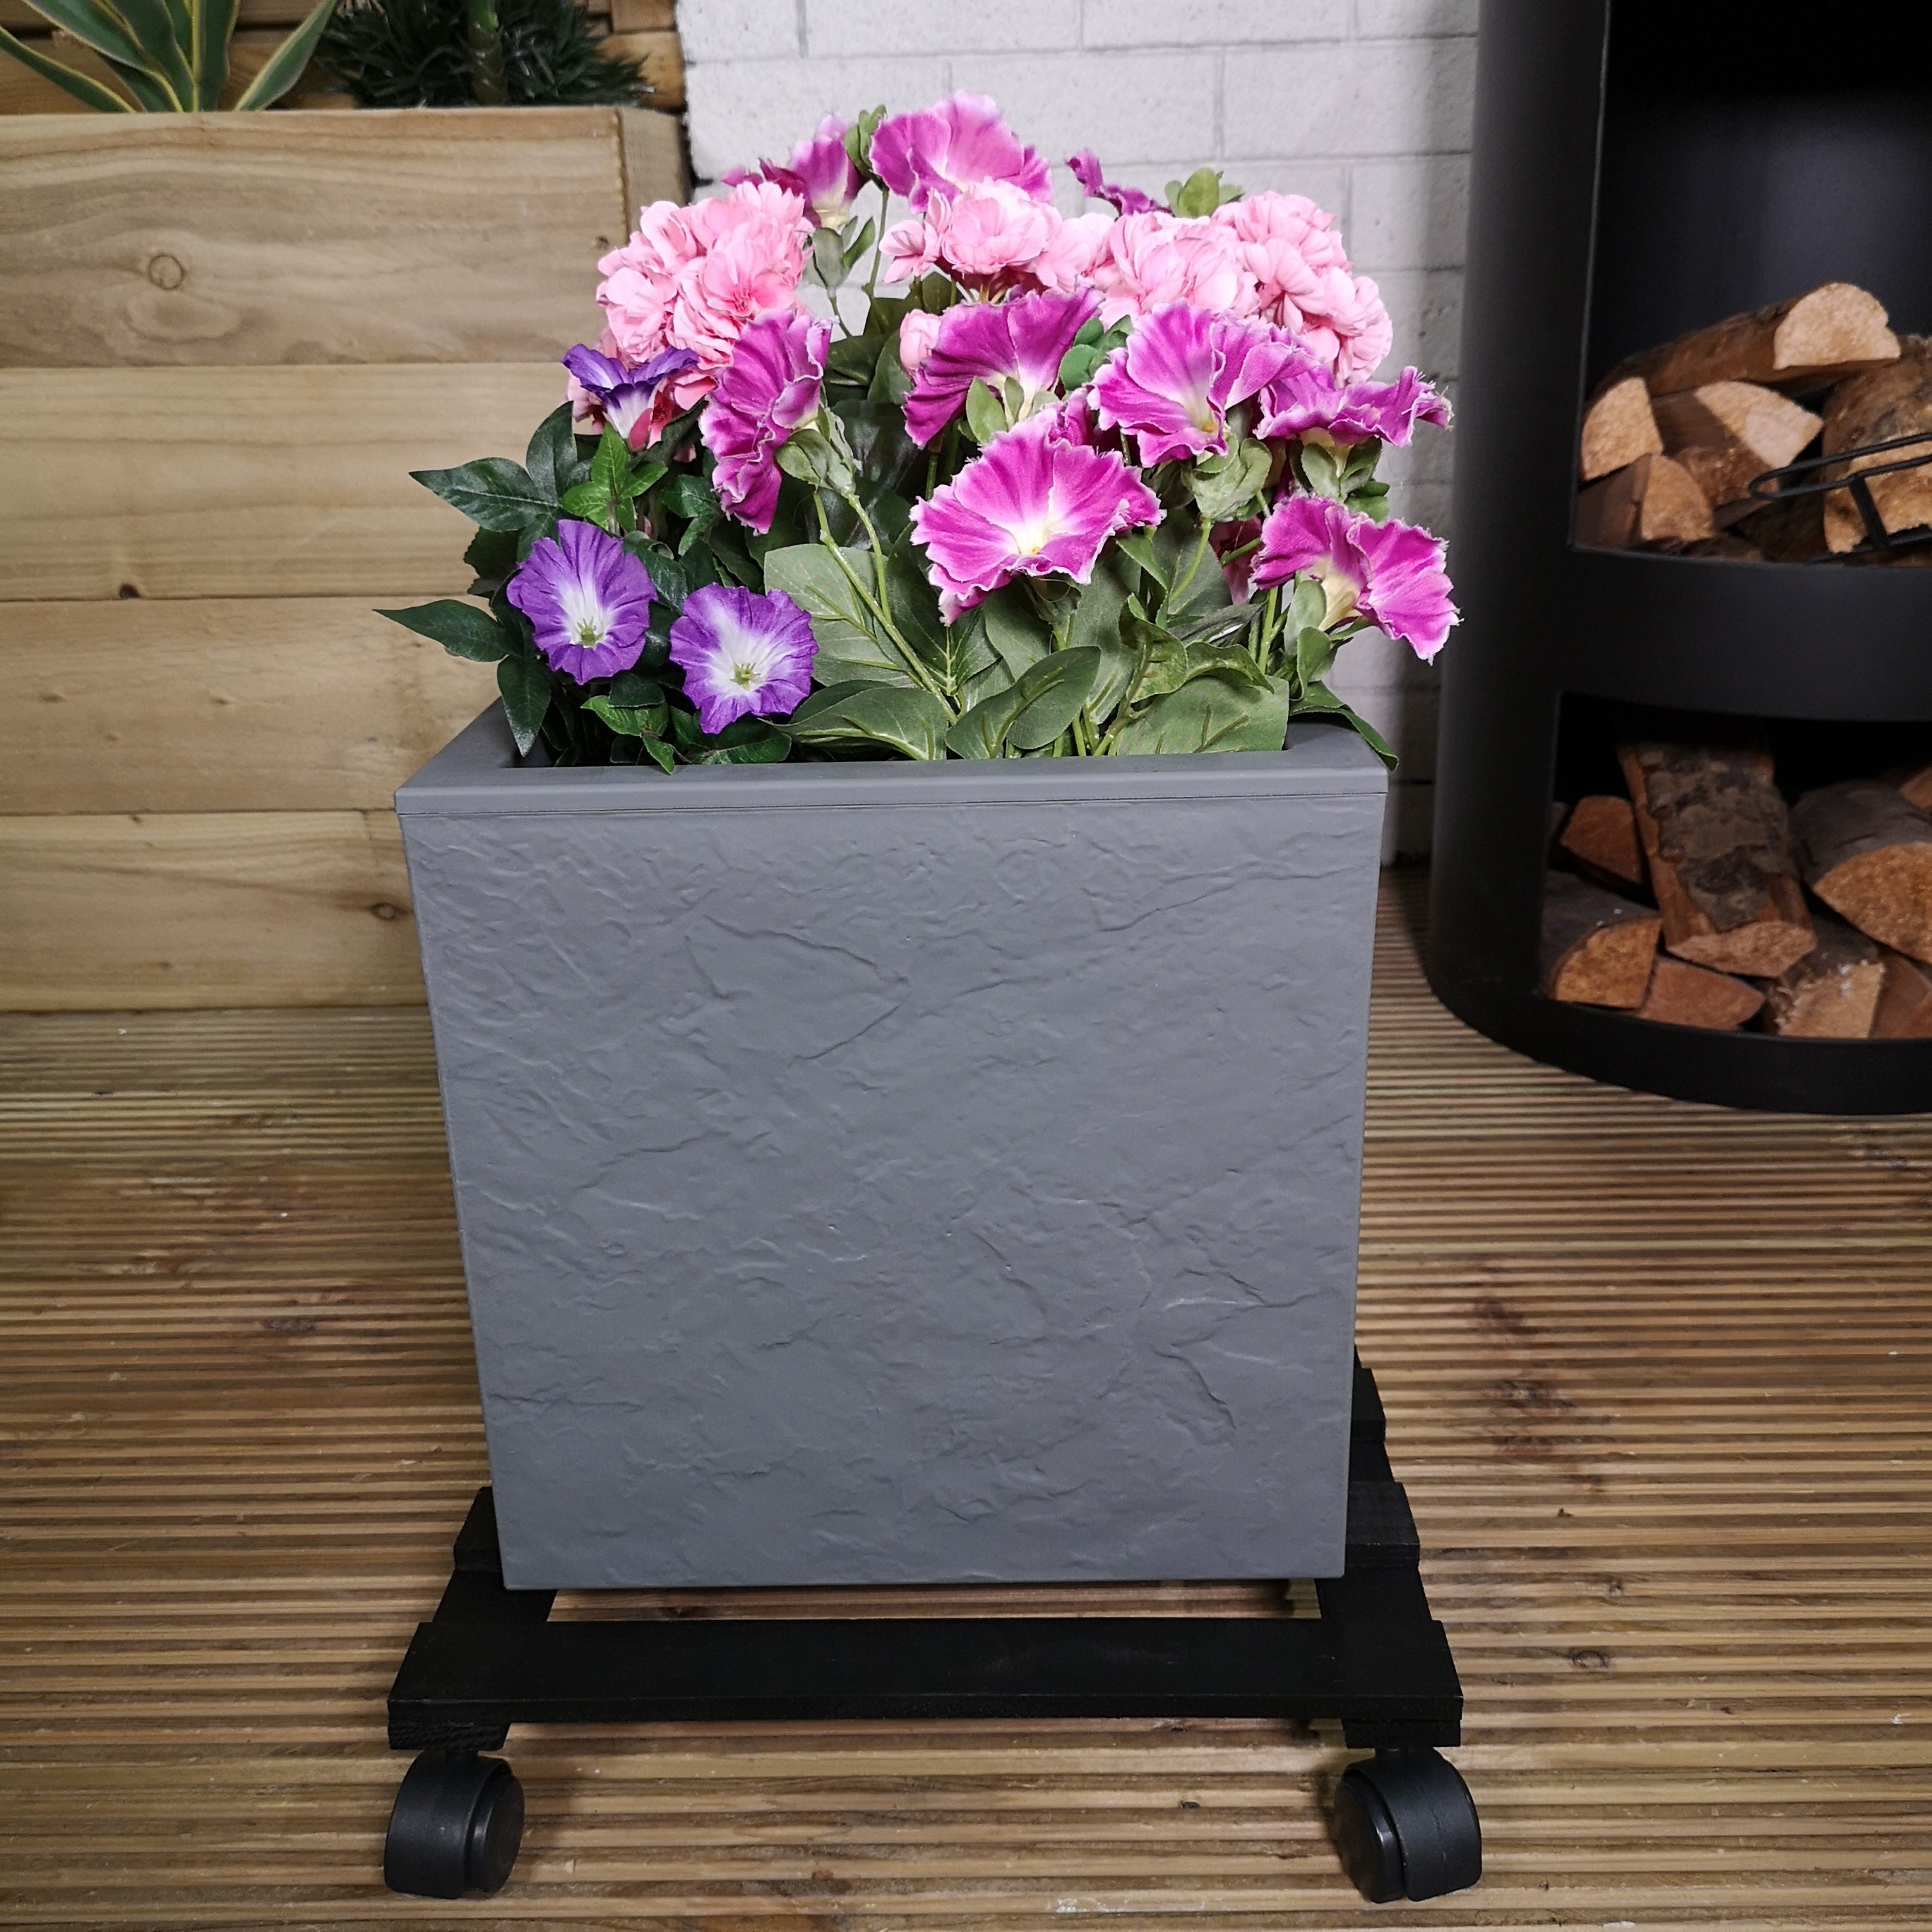 35cm Black Square Wooden Garden Plant Pot Flower Trolley Stand On Wheels